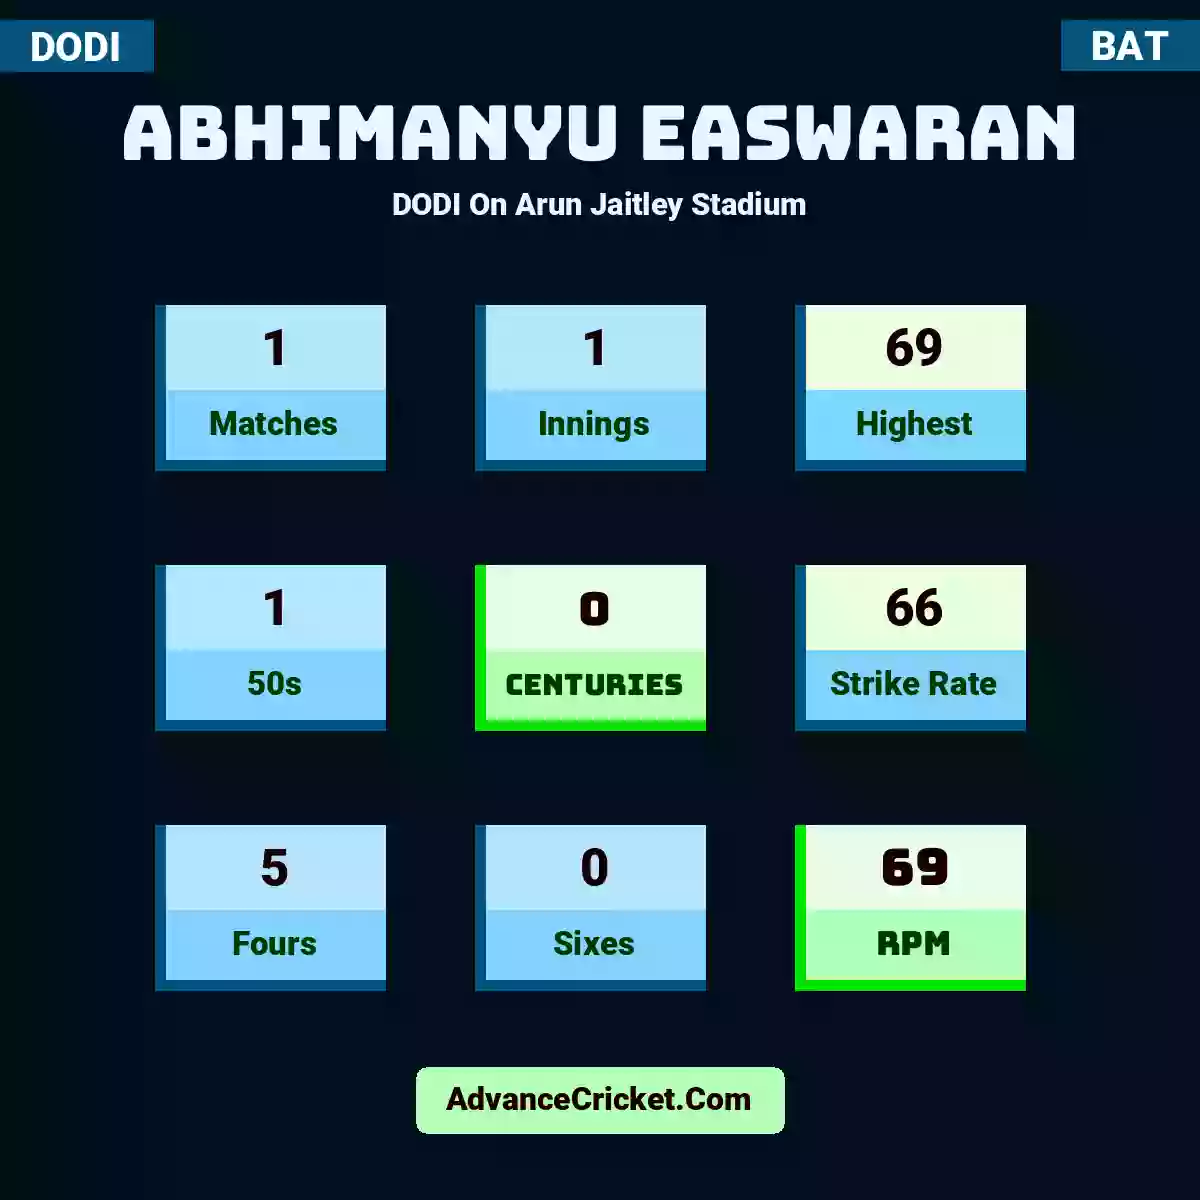 Abhimanyu Easwaran DODI  On Arun Jaitley Stadium, Abhimanyu Easwaran played 1 matches, scored 69 runs as highest, 1 half-centuries, and 0 centuries, with a strike rate of 66. A.Easwaran hit 5 fours and 0 sixes, with an RPM of 69.